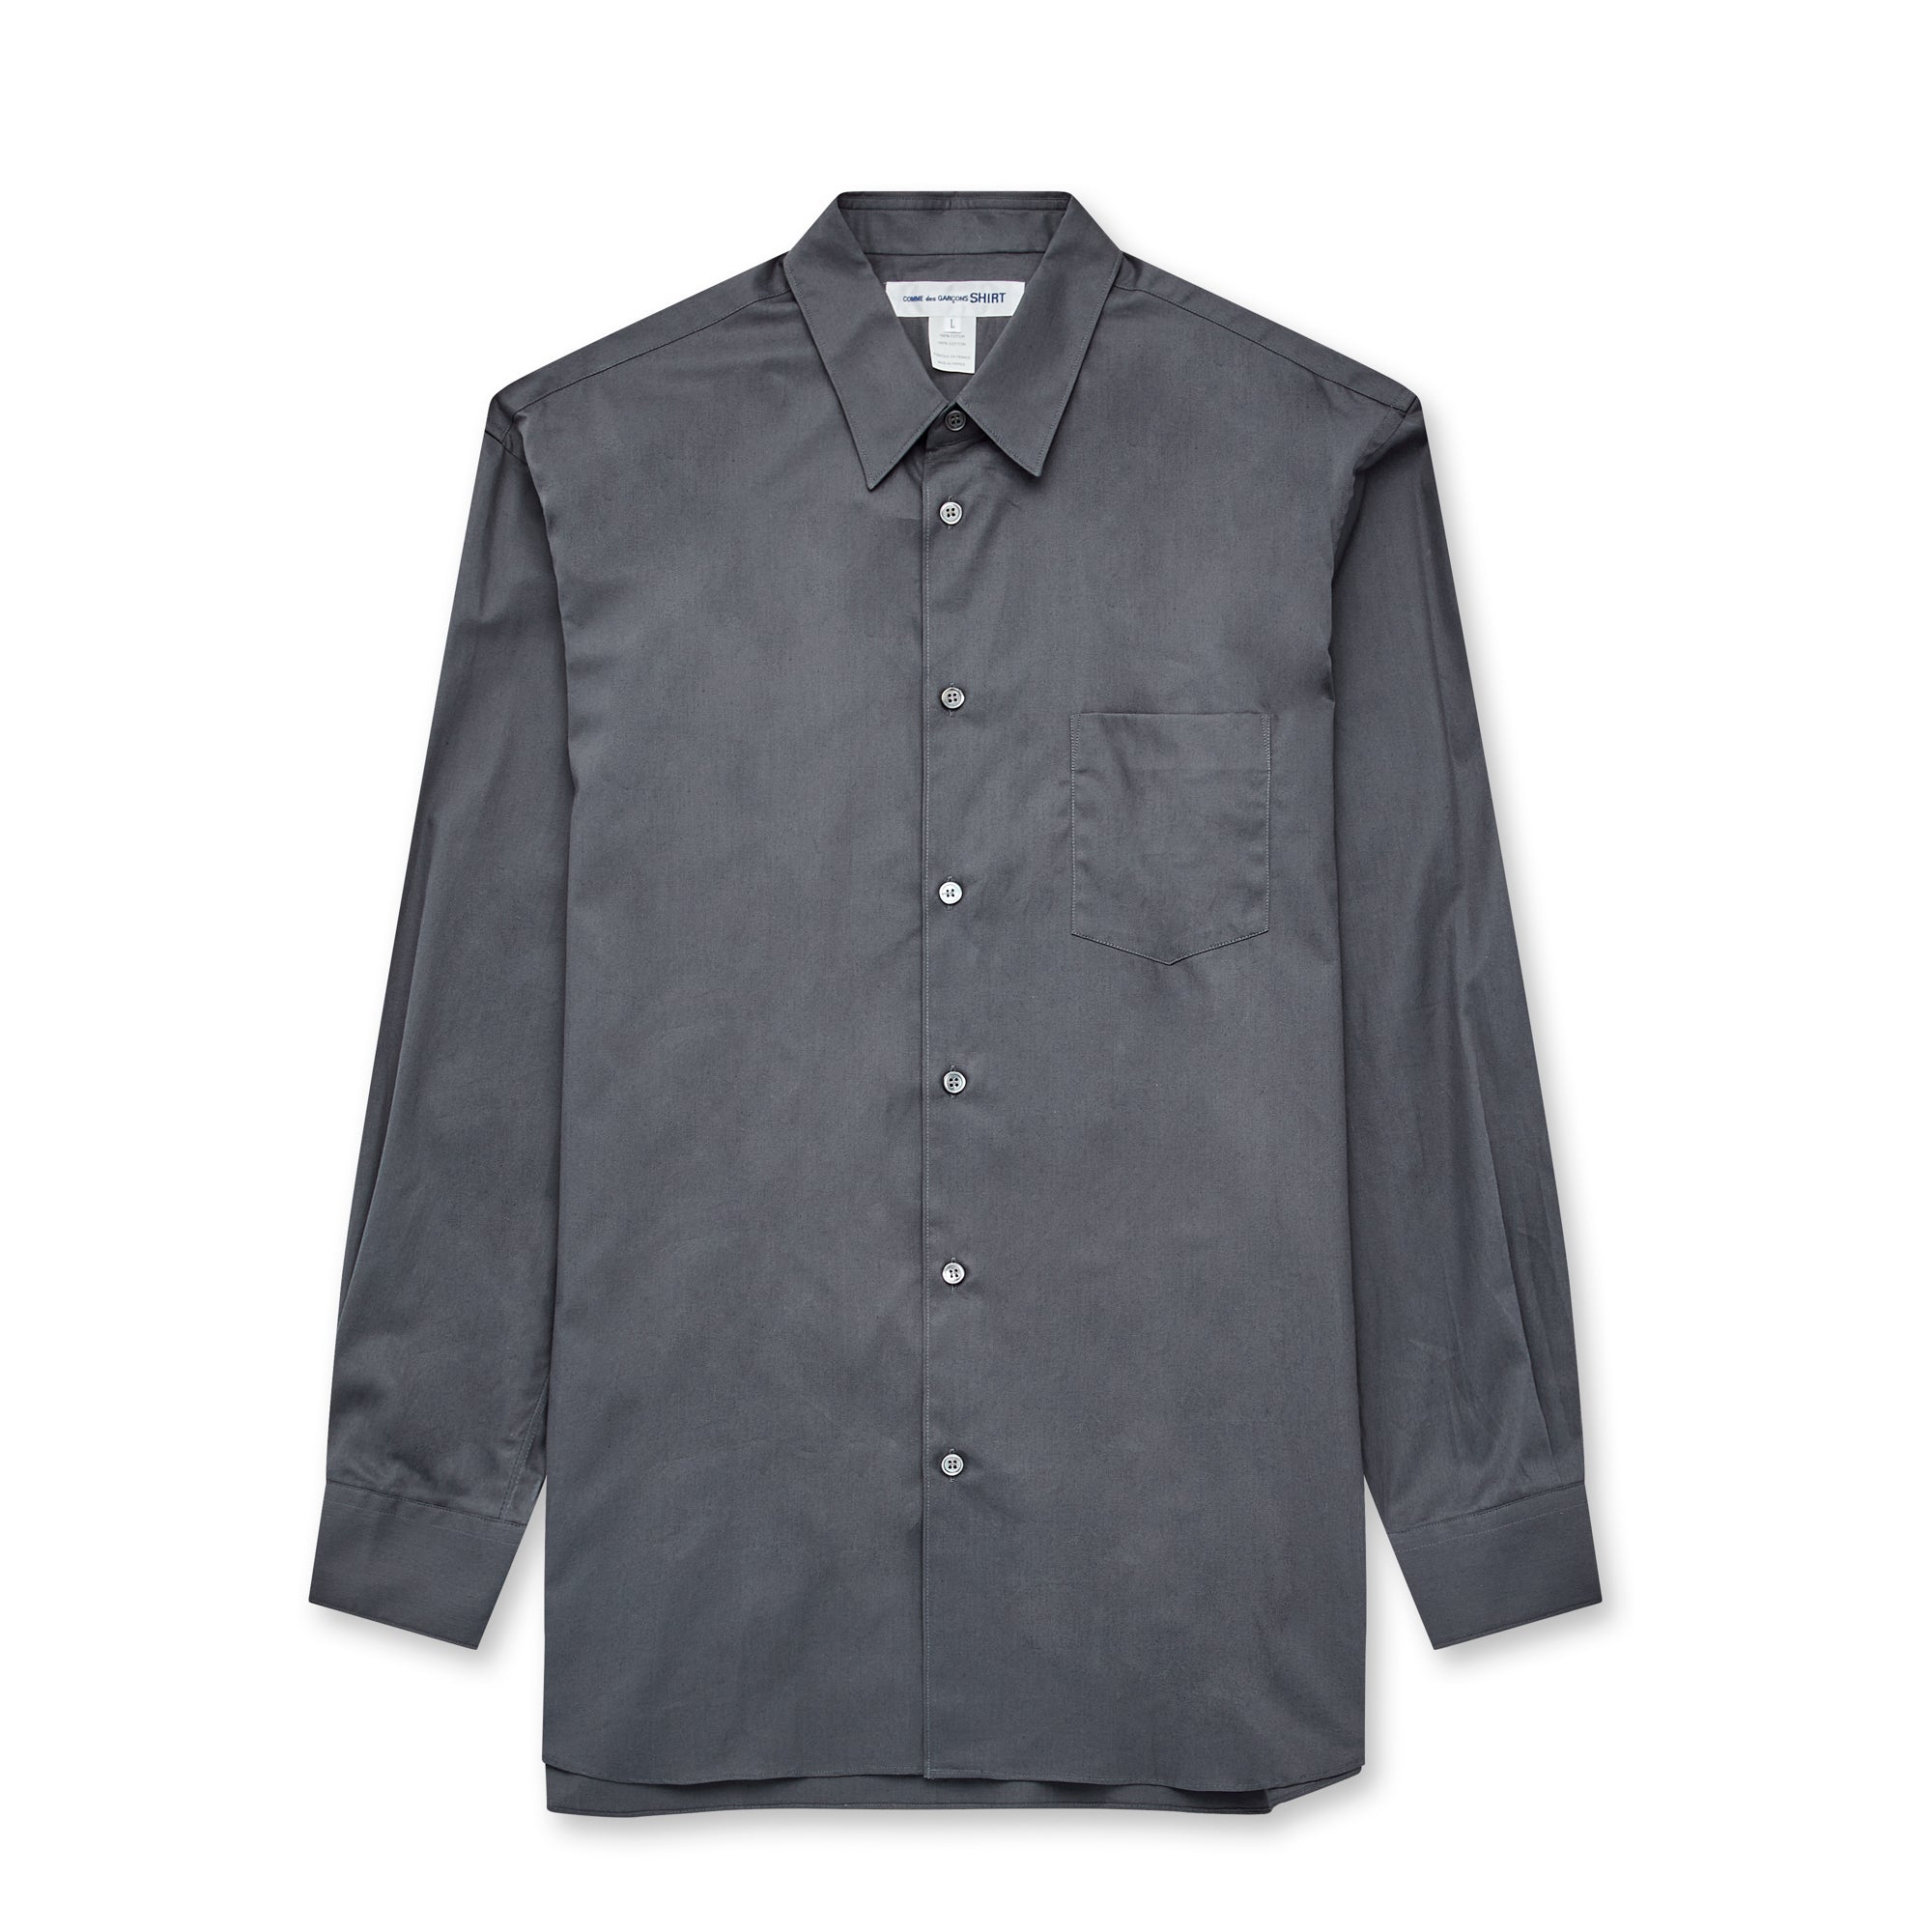 CDG Shirt Forever - Classic Fit Poplin Plain Shirt - (Grey) view 1